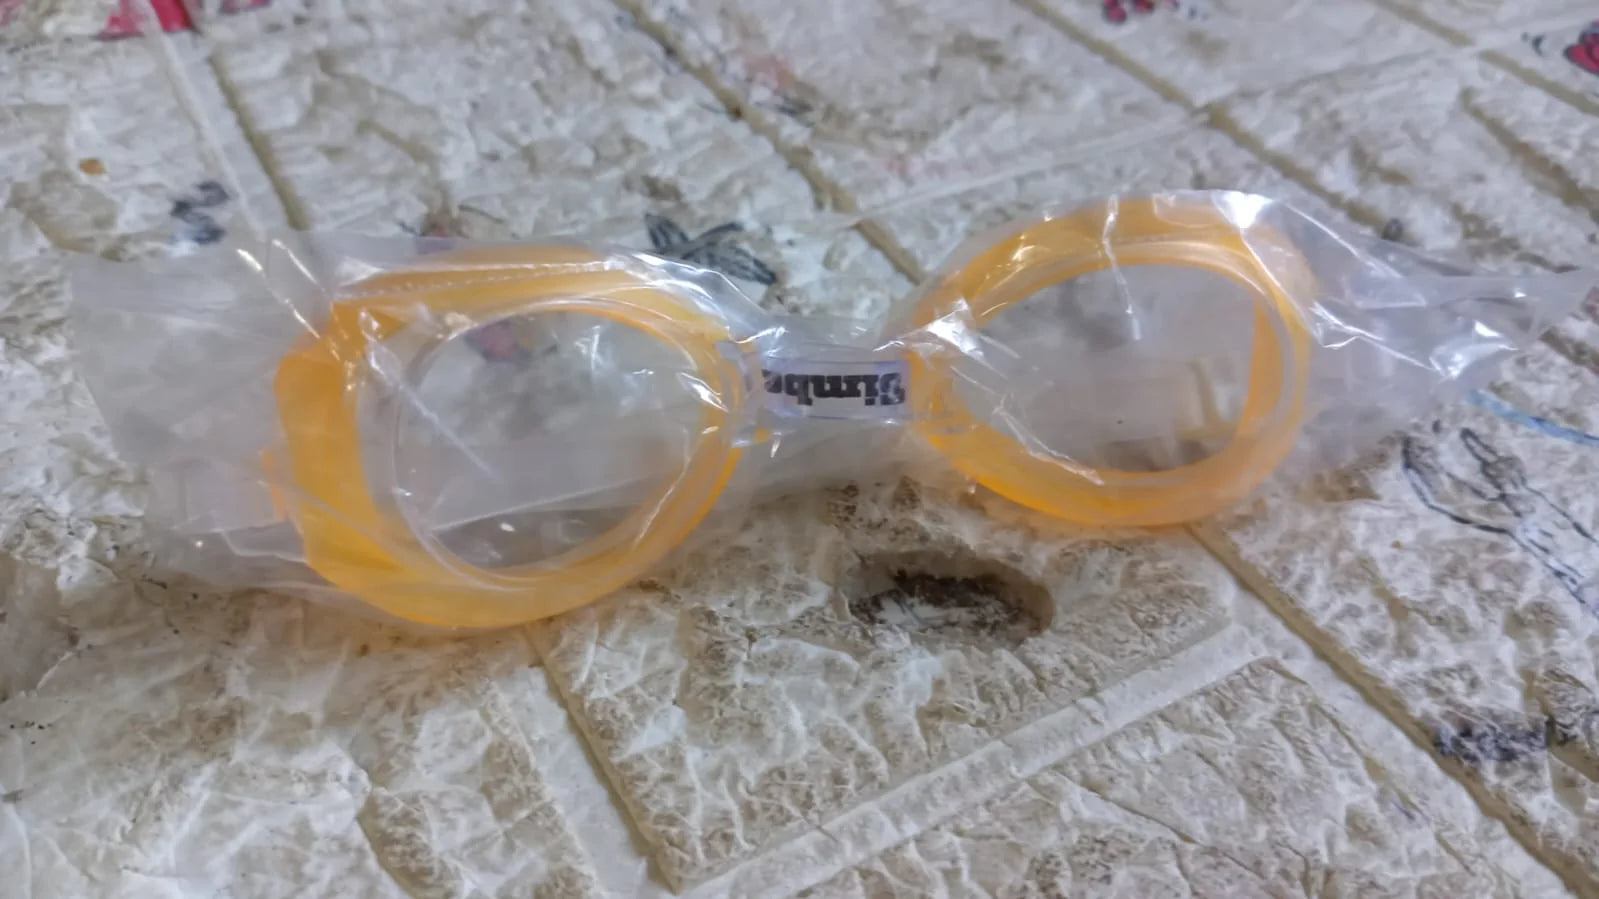 0270 Cute Design Adjustable Swimming Goggles Summer Season Pool Party Swim Sunglasses For Kids Boys, Clear Vision Anti-Fog Waterproof (1 Pc )